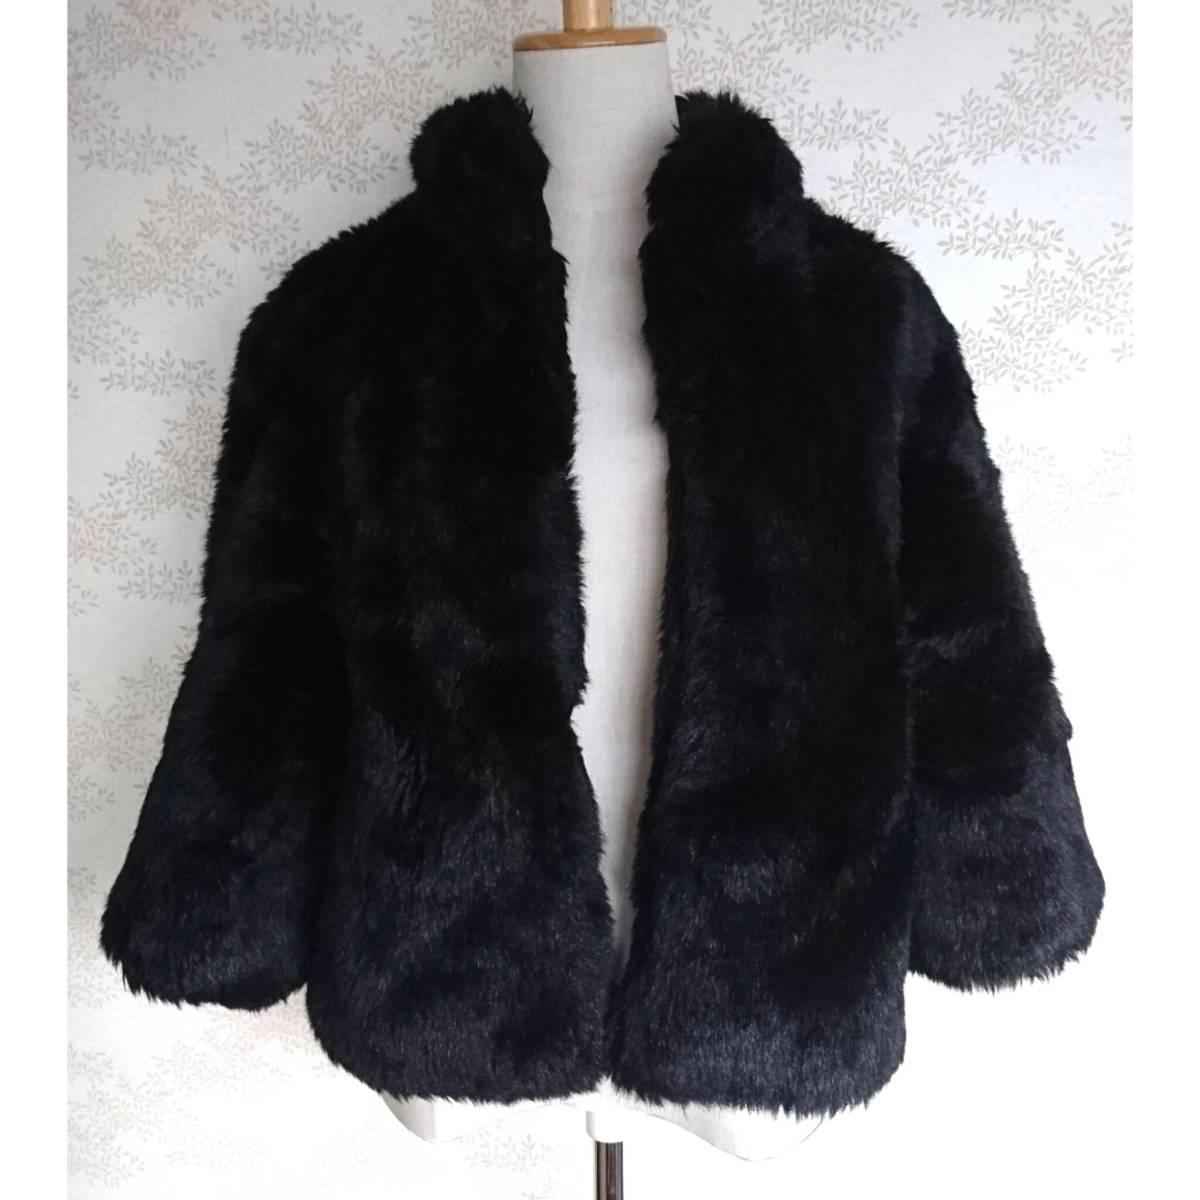  boa coat fur coat mo Como ko outer coat fur Fur vintage Vintage Vintage old clothes boa coat fur black black 7 minute height 